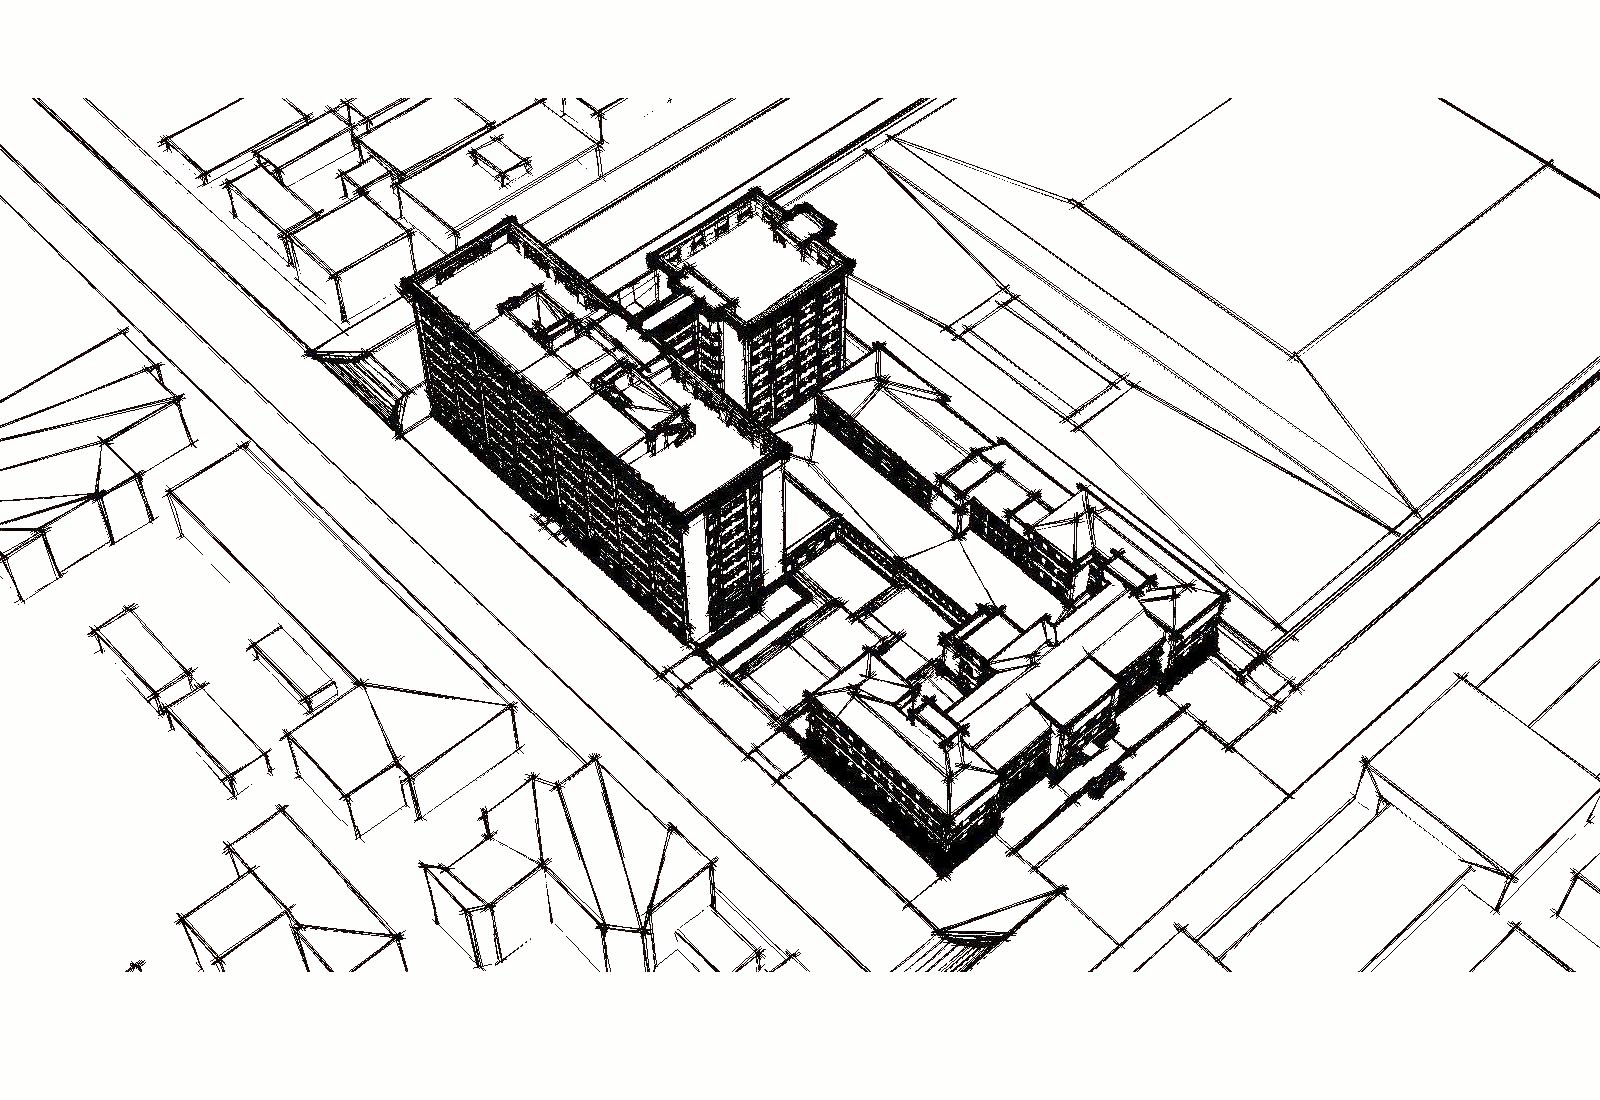 Besta hospital in Milan - 2nd phase - Sketch